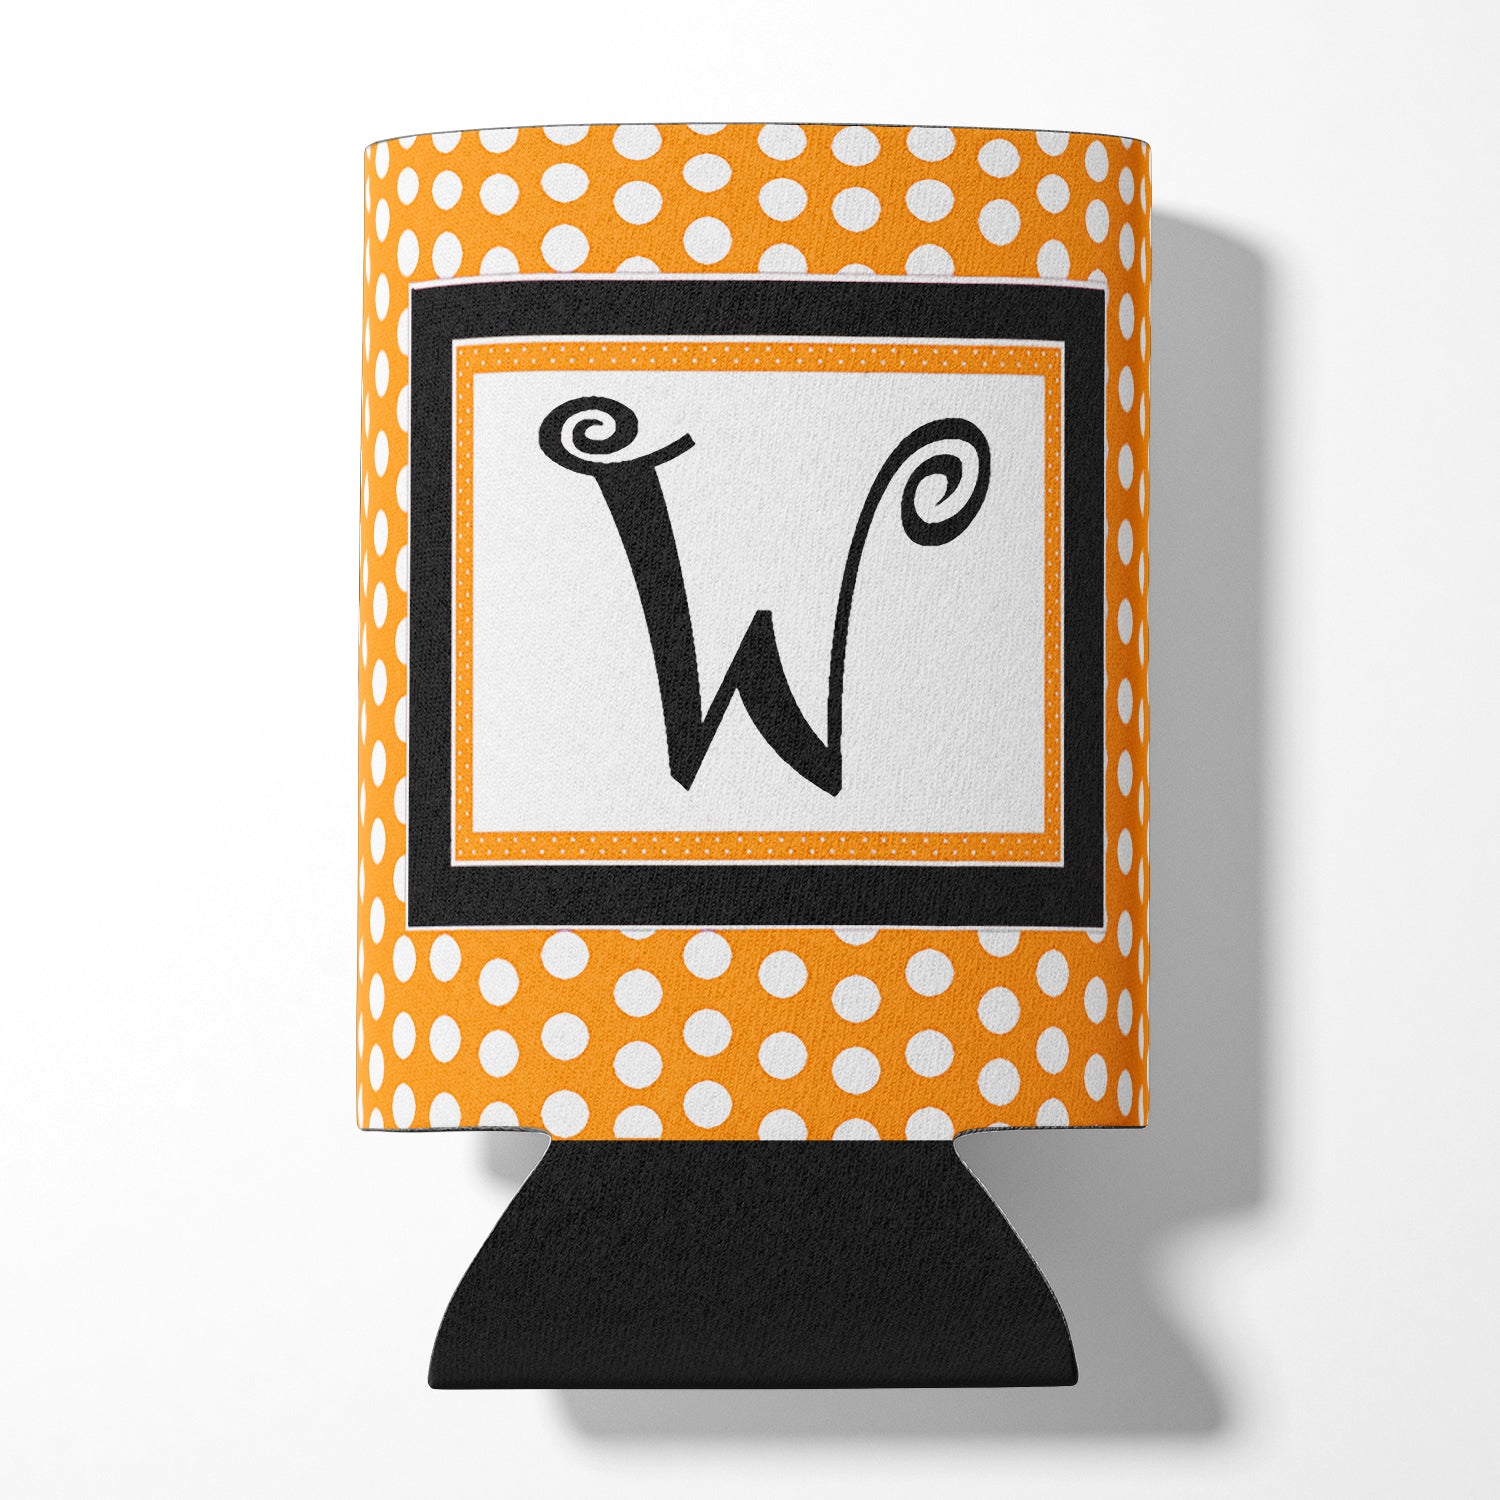 Letter W Initial Monogram - Orange Polkadots Can or Bottle Beverage Insulator Hugger